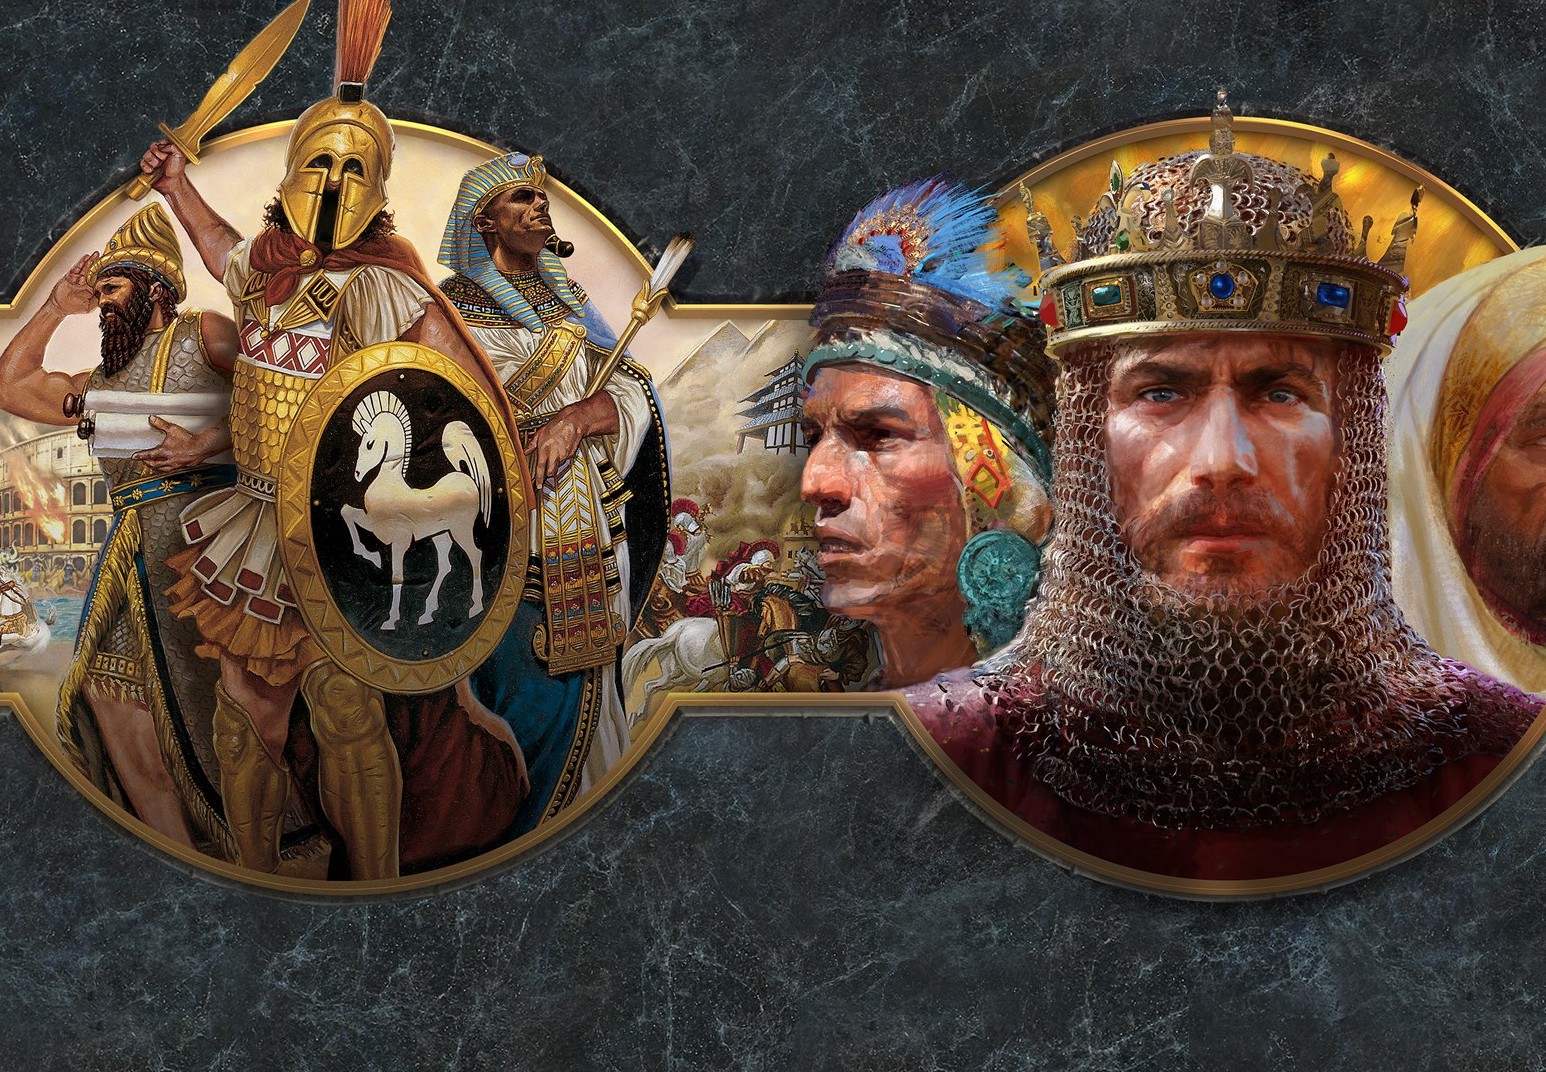 Age of Empires Definitive Edition Bundle